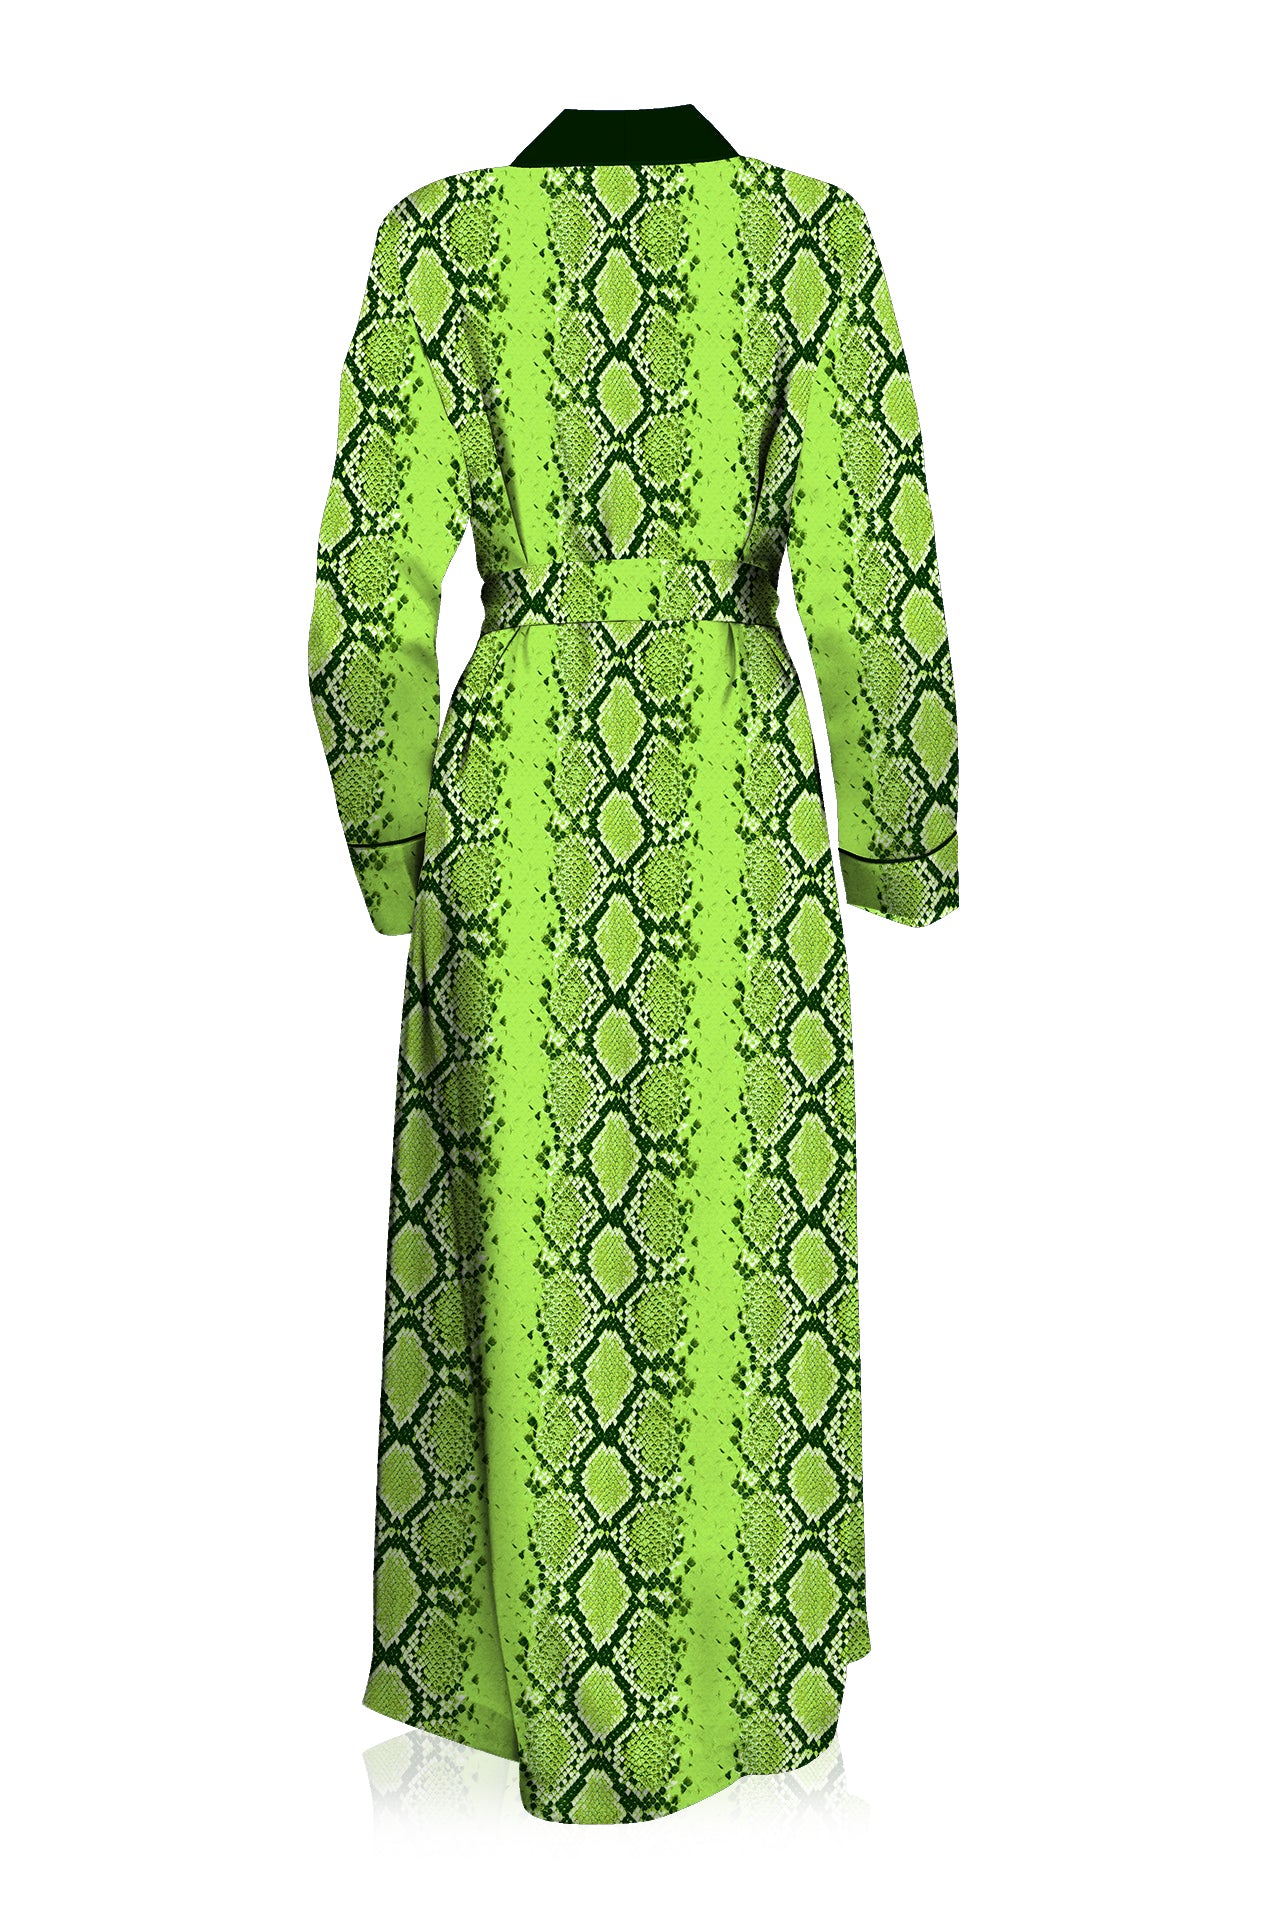 "light green kimono" "robe silk kimono" "Kyle X Shahida" "snakeskin print kimono"